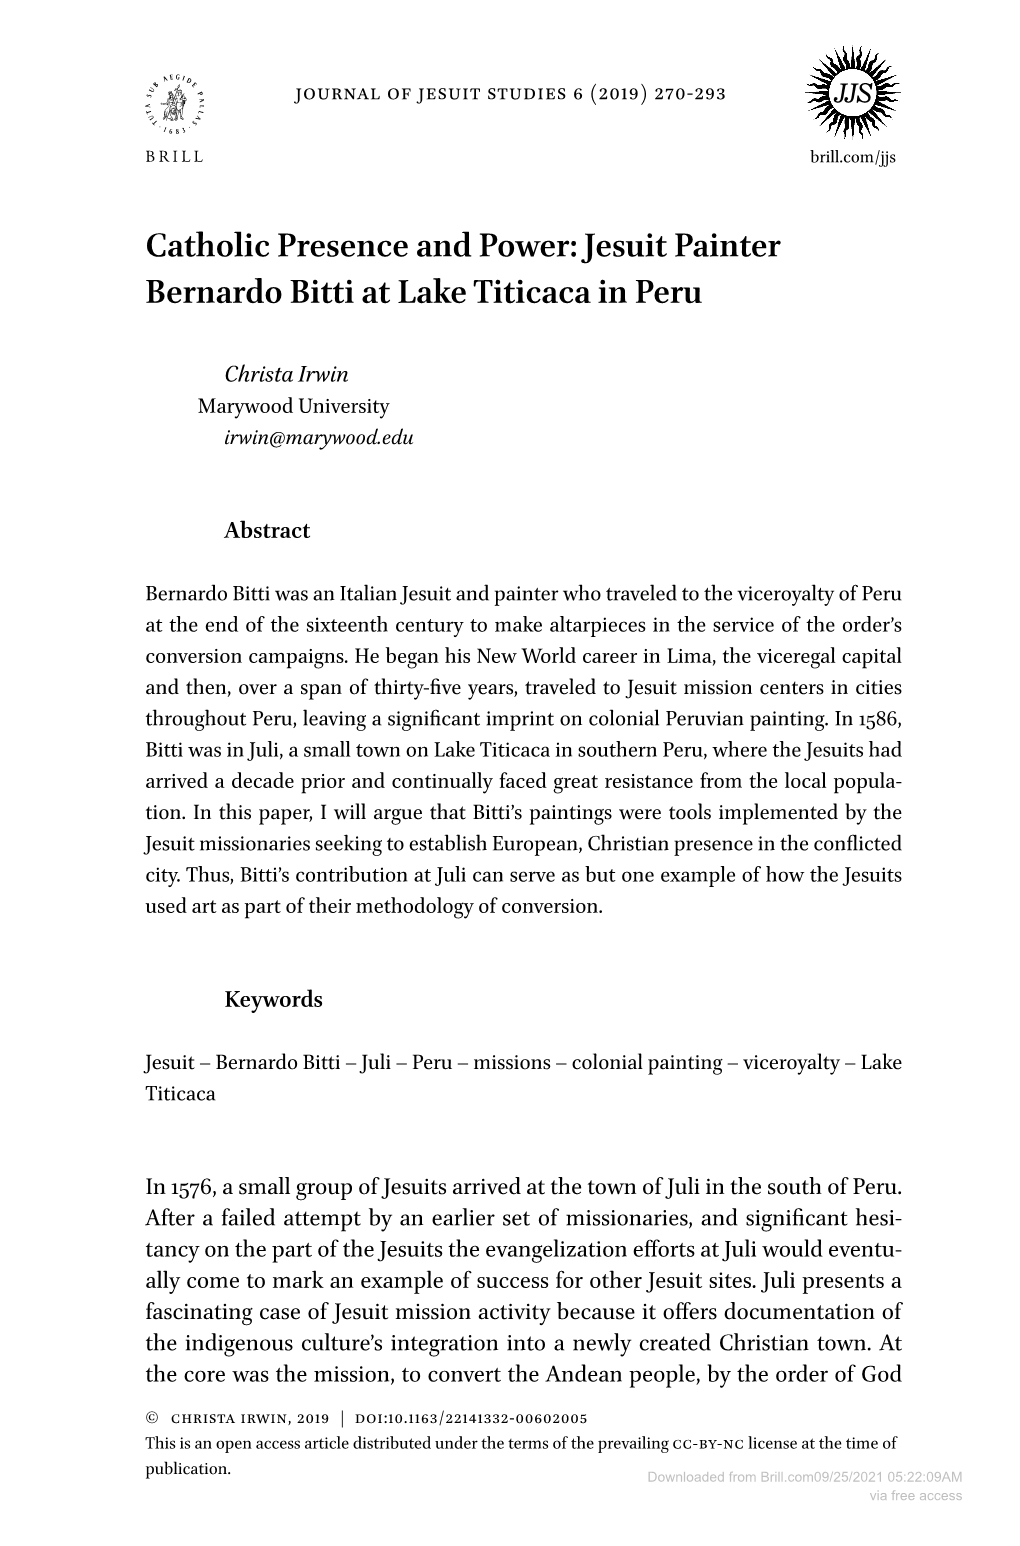 Catholic Presence and Power: Jesuit Painter Bernardo Bitti at Lake Titicaca in Peru